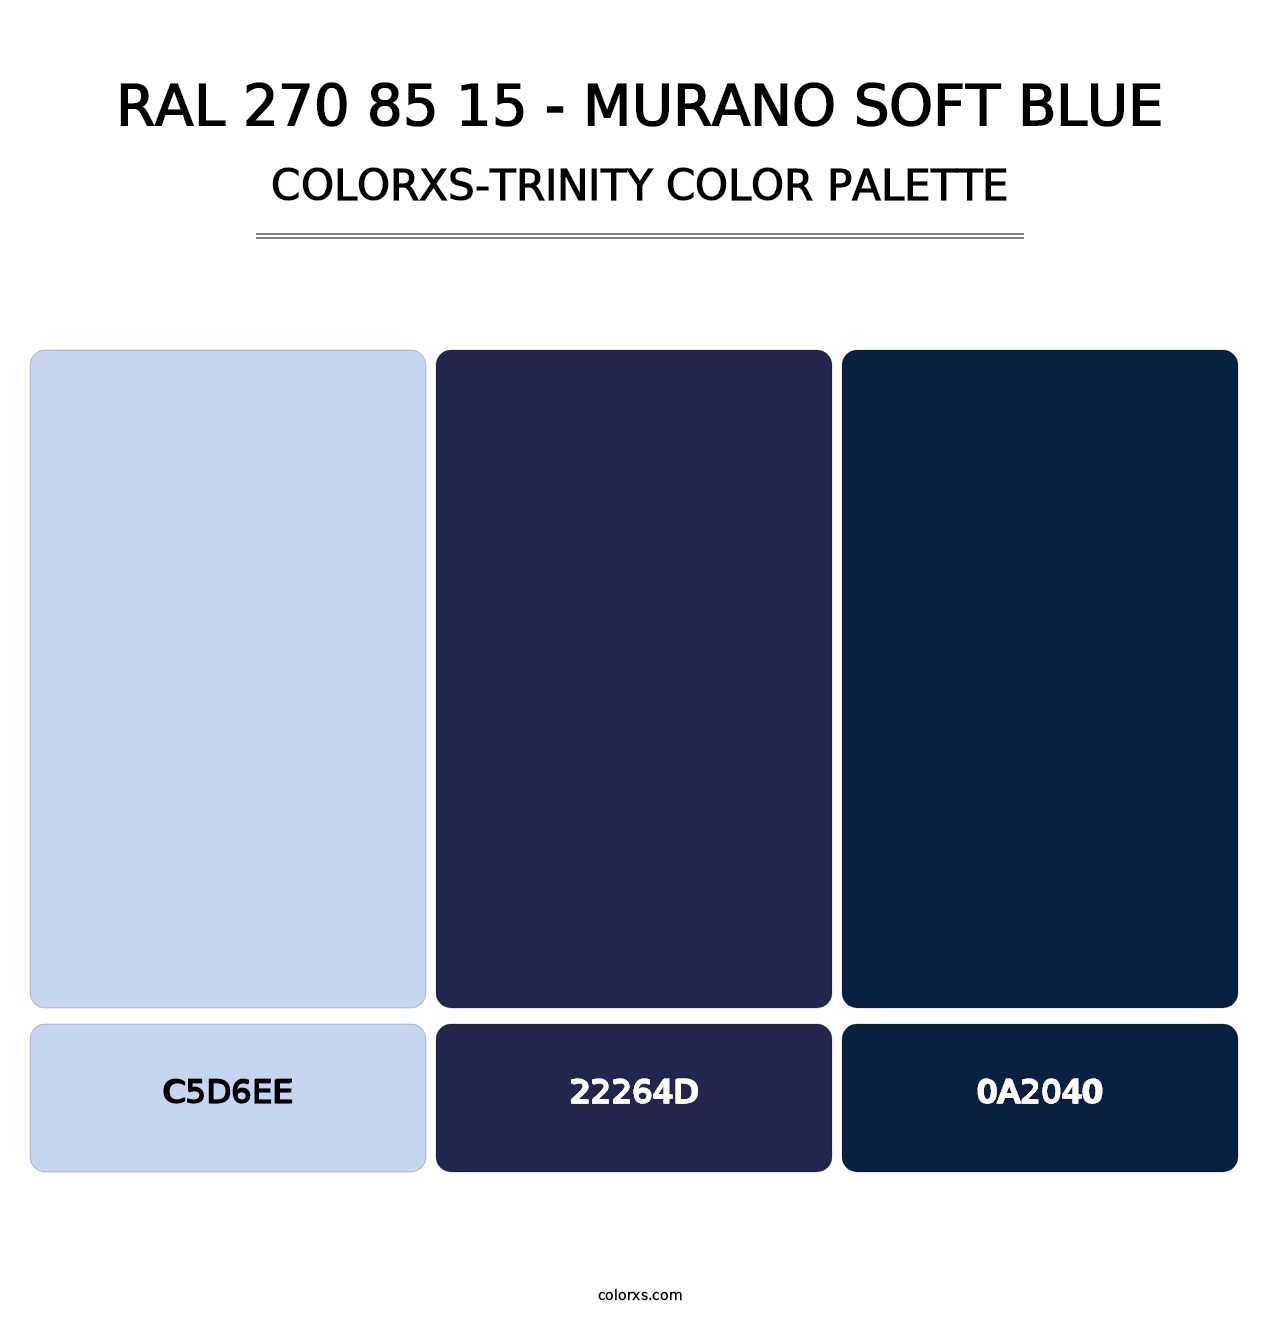 RAL 270 85 15 - Murano Soft Blue - Colorxs Trinity Palette